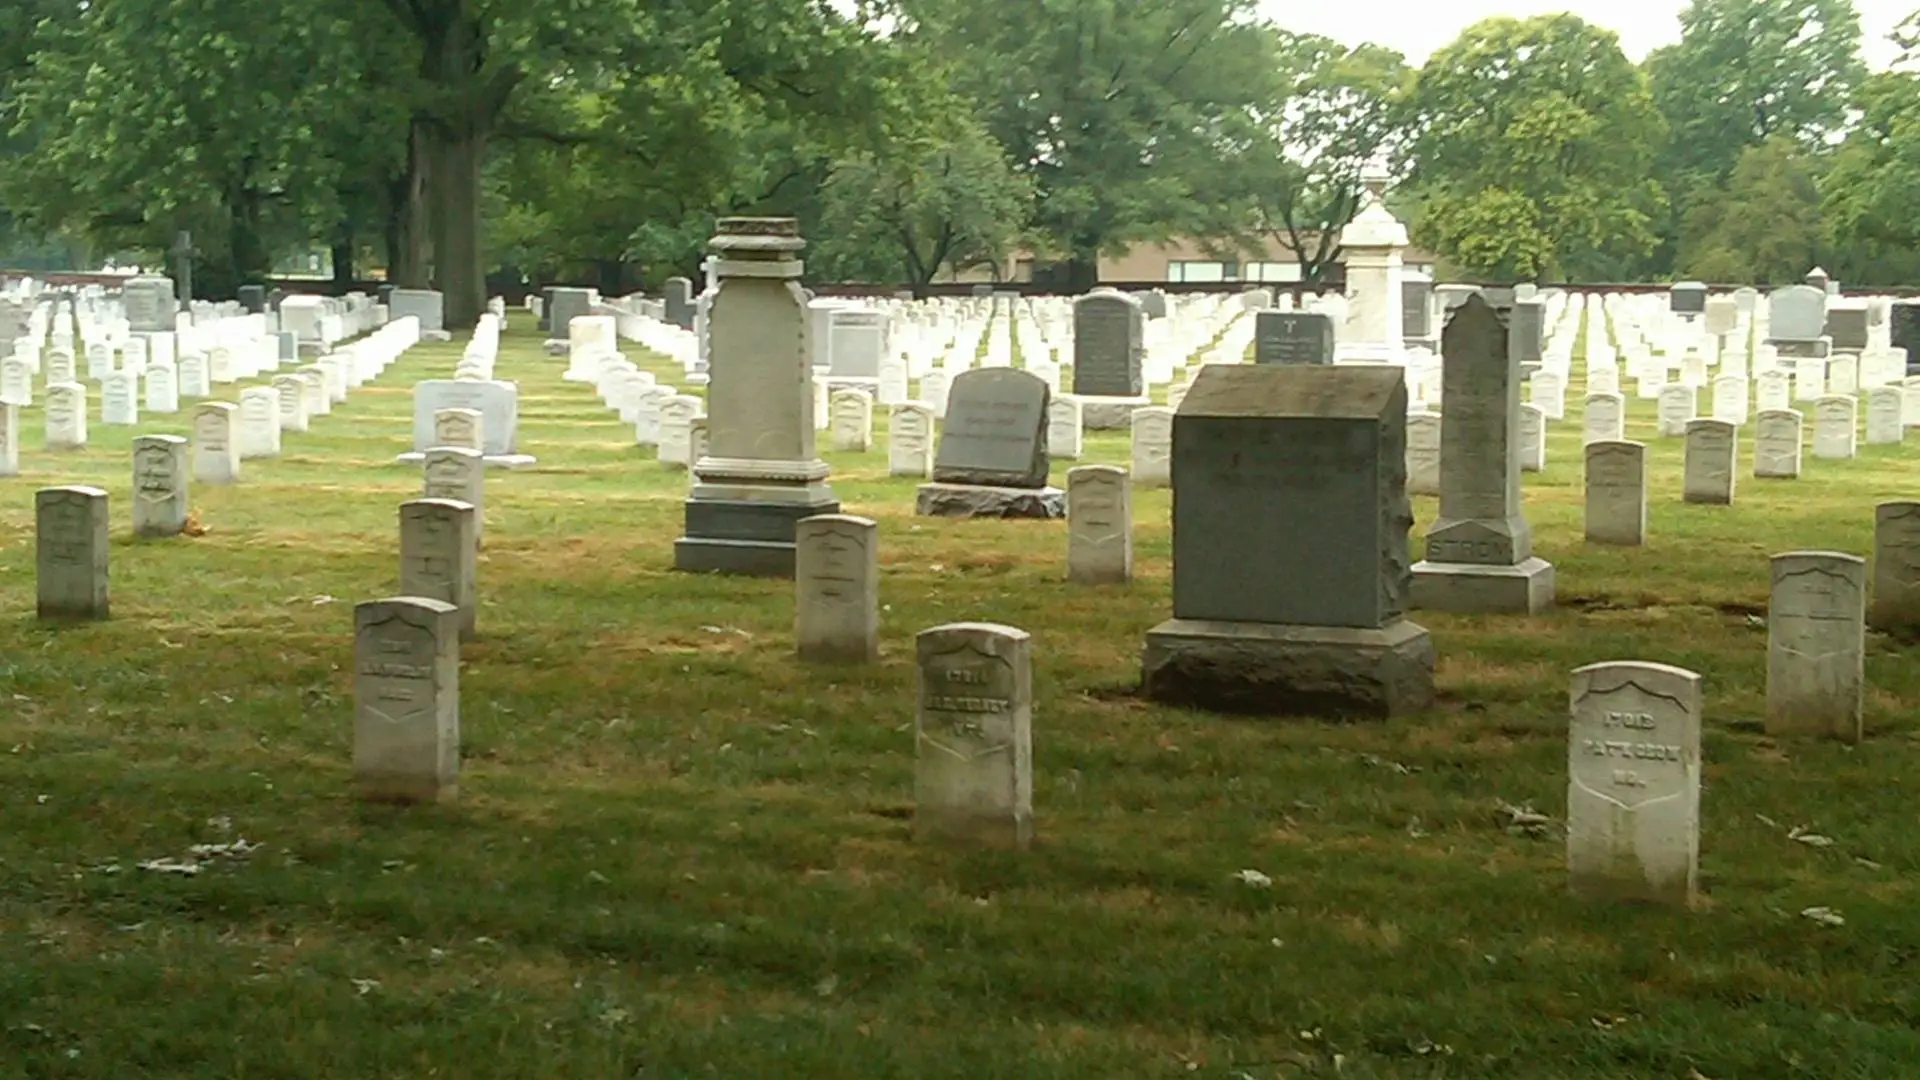 Herbi-Systems Helps Organize Volunteer Effort to Spruce Up Arlington National Cemetery